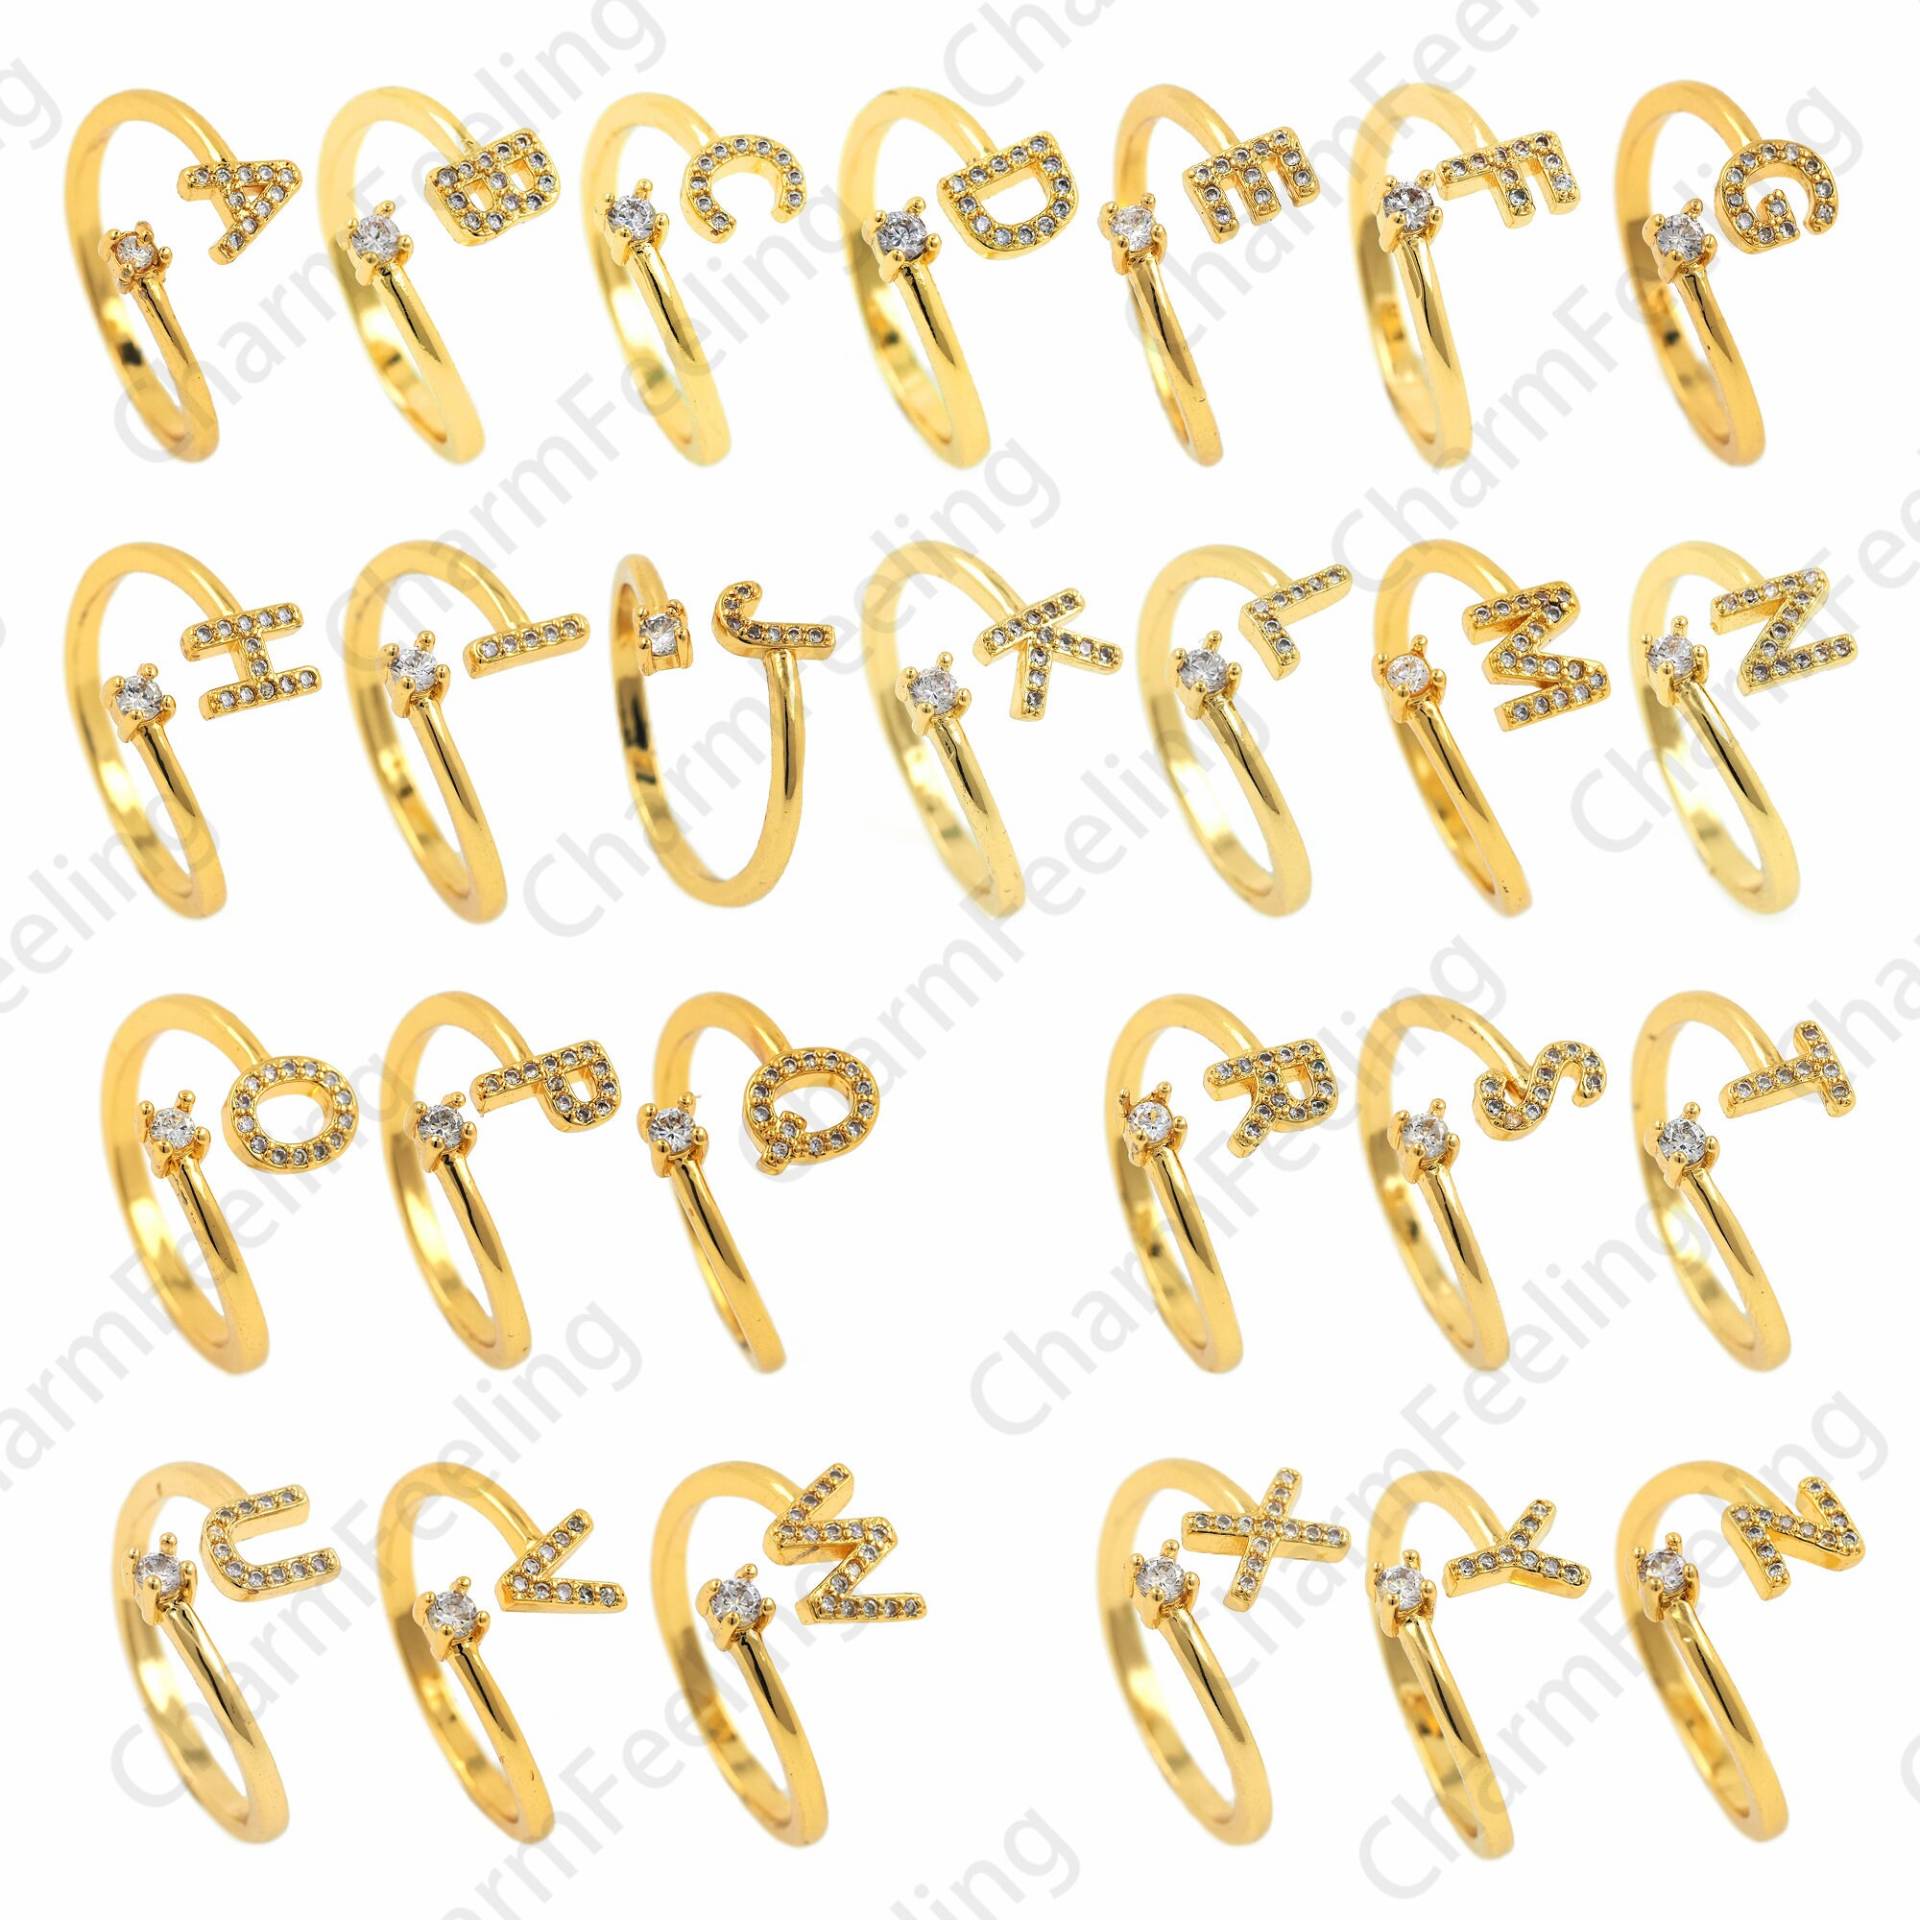 18K Gold Filled Buchstaben Ring, Micropavé Cz Verstellbarer Ring, Gold Offener Ring, Text Ring, 26 Ring, Zarter Ring, Buchstaben Charm, Ring Charm von CharmFeeling